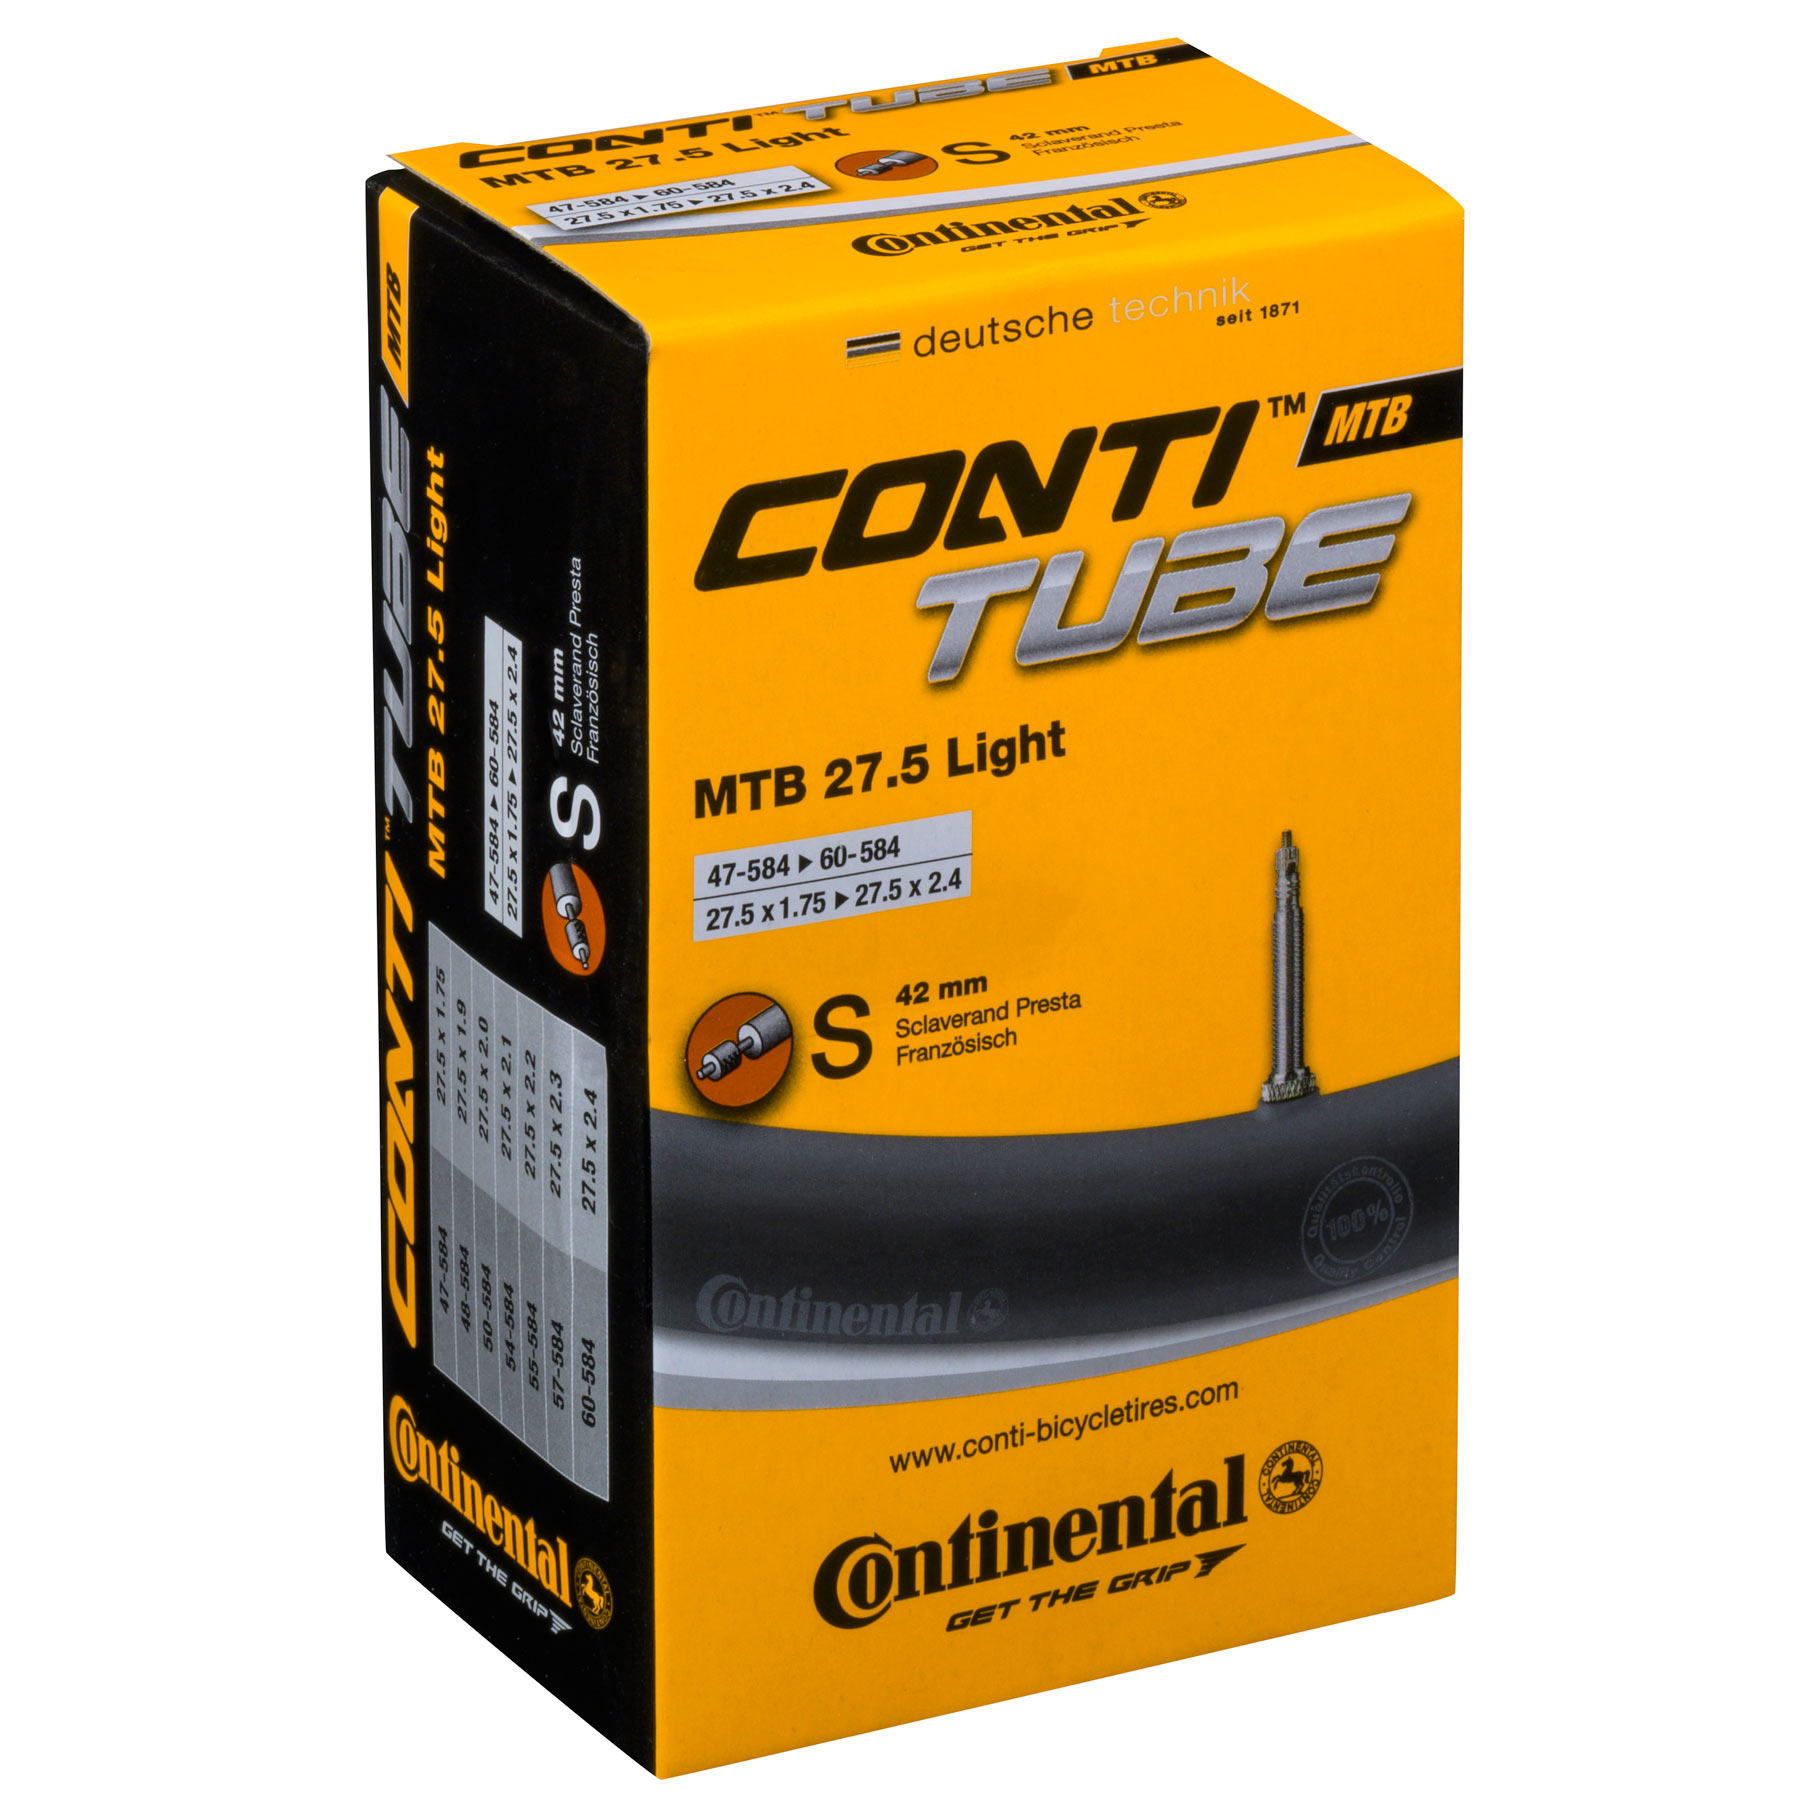 Productfoto van Continental MTB 27.5 Light S42 Tube